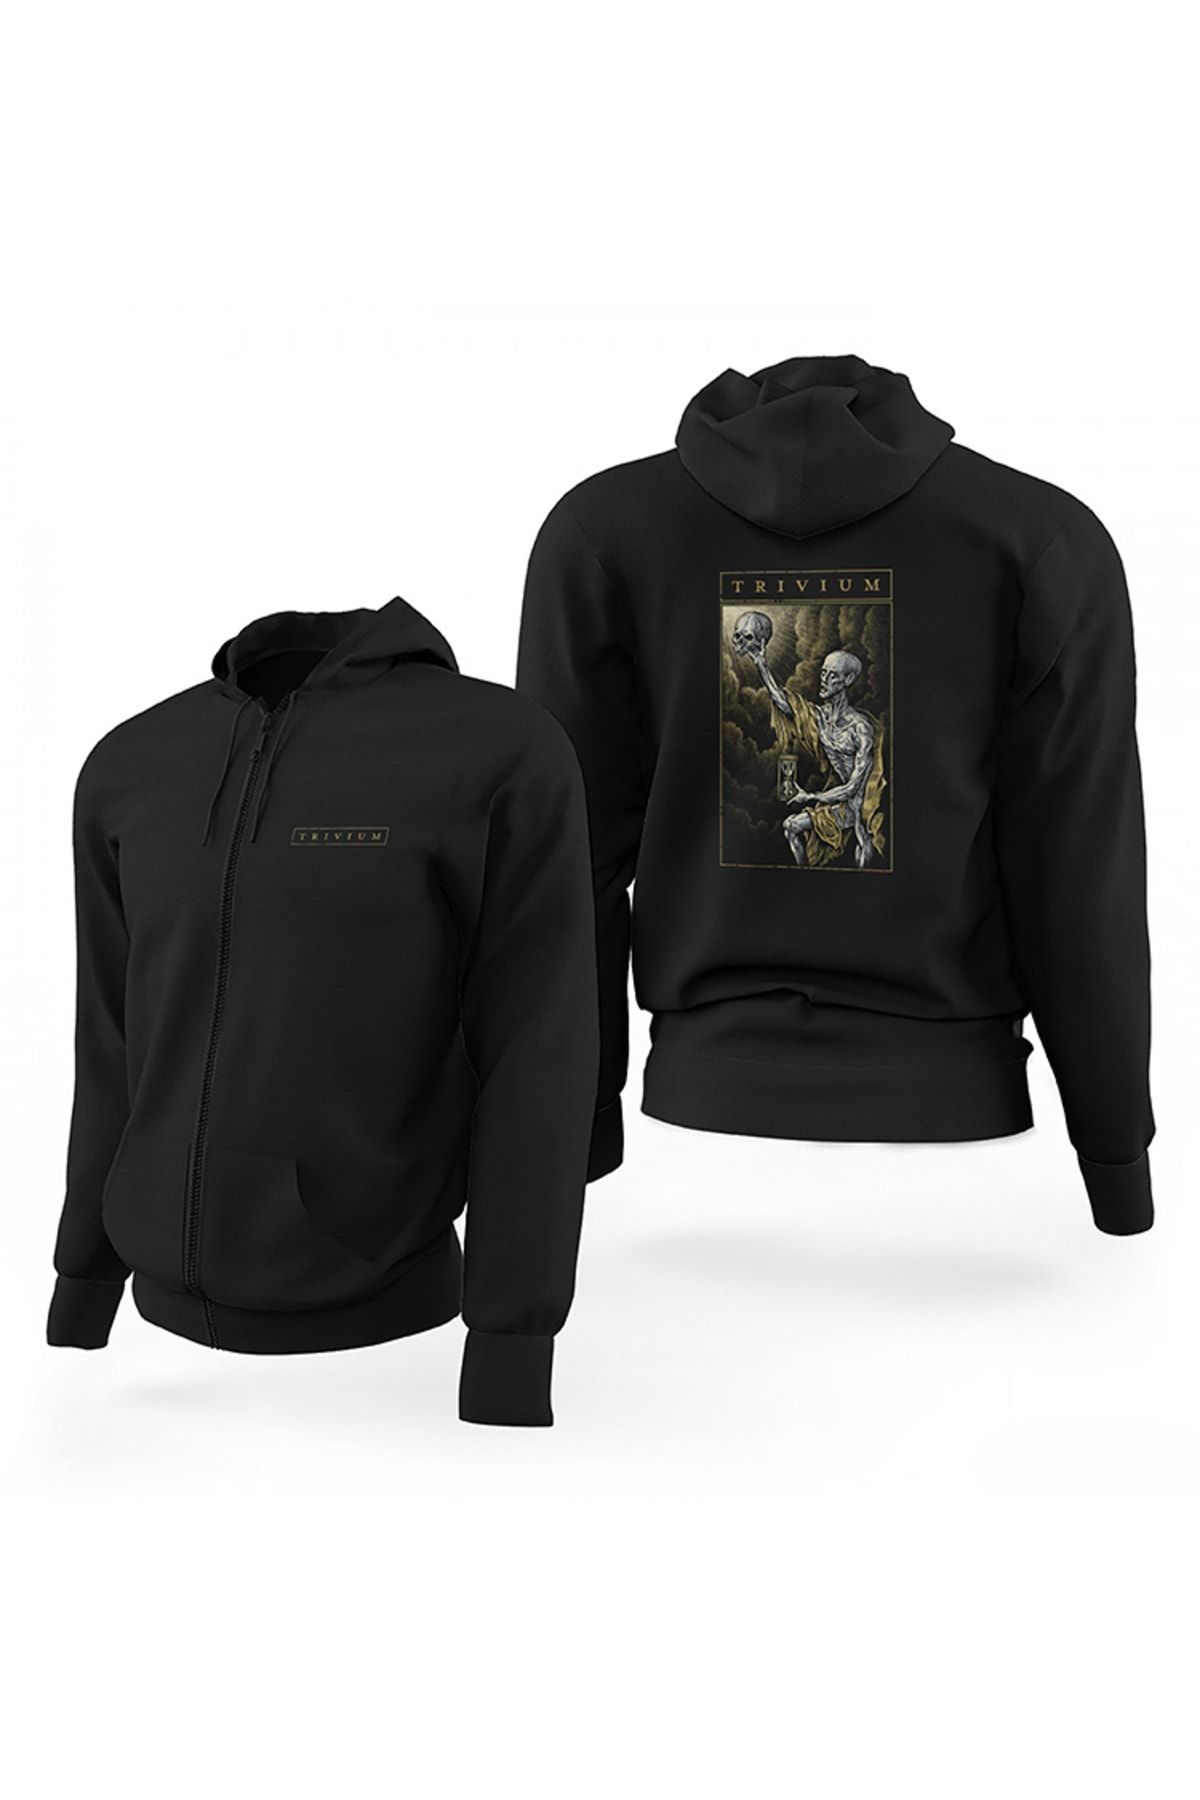 Z zepplin Trivium Skull Siyah Fermuarlı Limited Edition Kapşonlu Sweatshirt